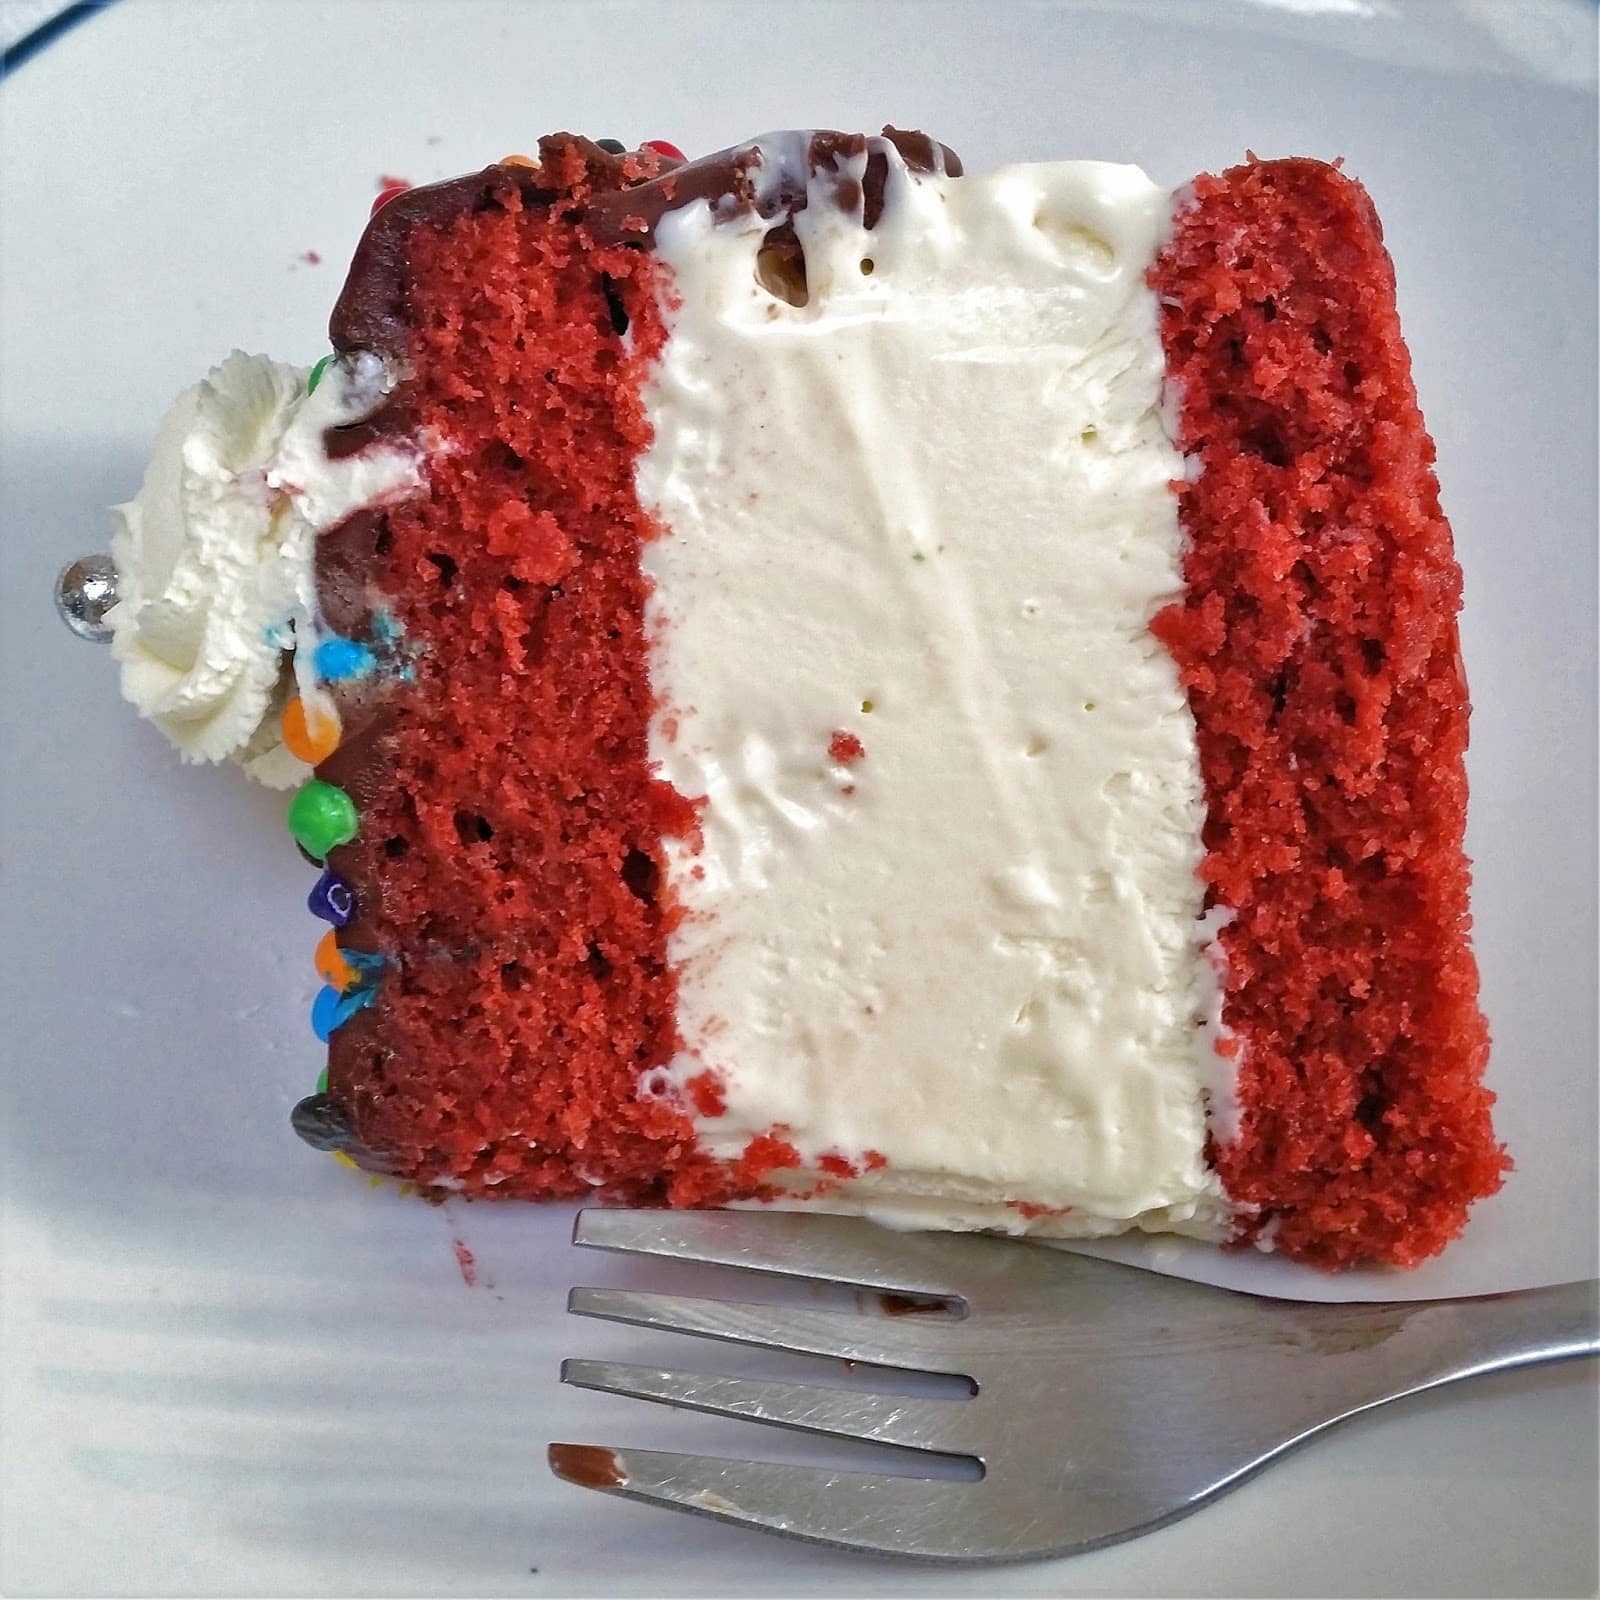 Red Velvet Ice Cream Cake â Recipe